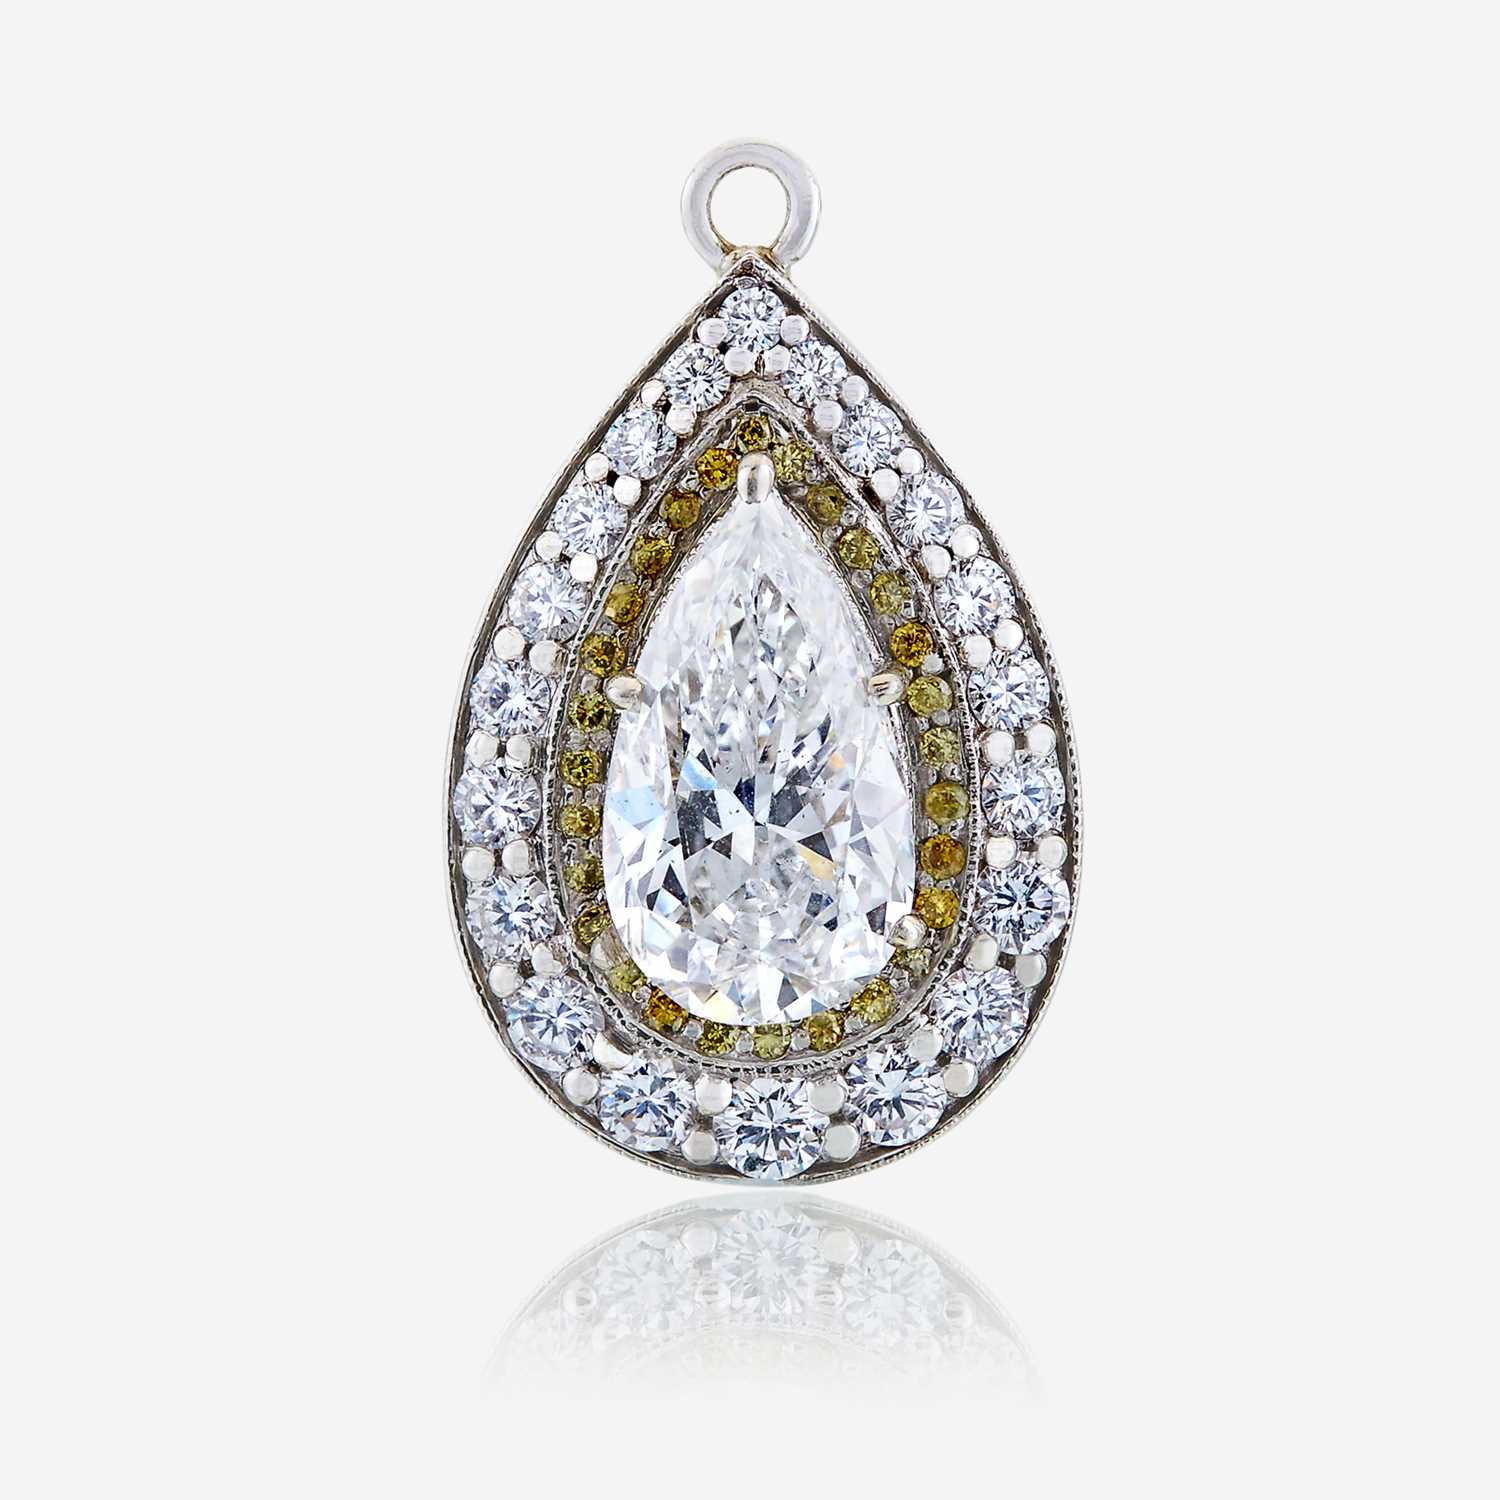 Lot 69 - A diamond, colored diamond, and ten karat white gold pendant